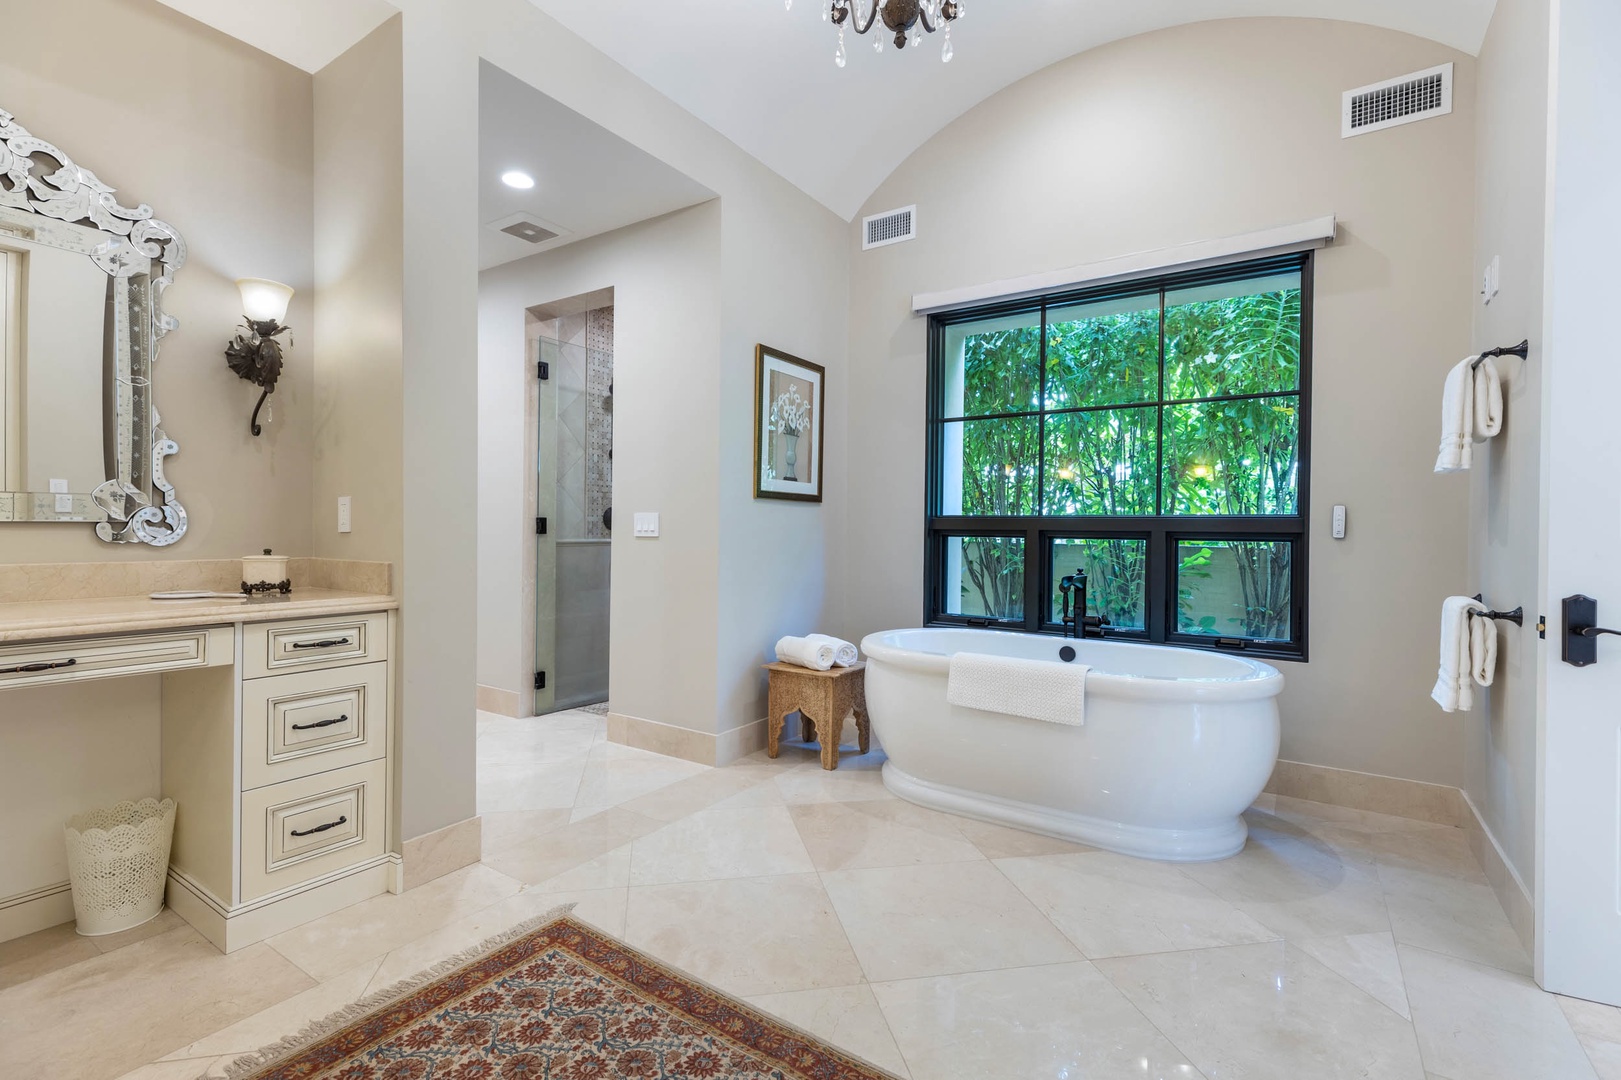 Honolulu Vacation Rentals, The Kahala Mansion - Spa-like ensuite bathroom with a large soaking tub.